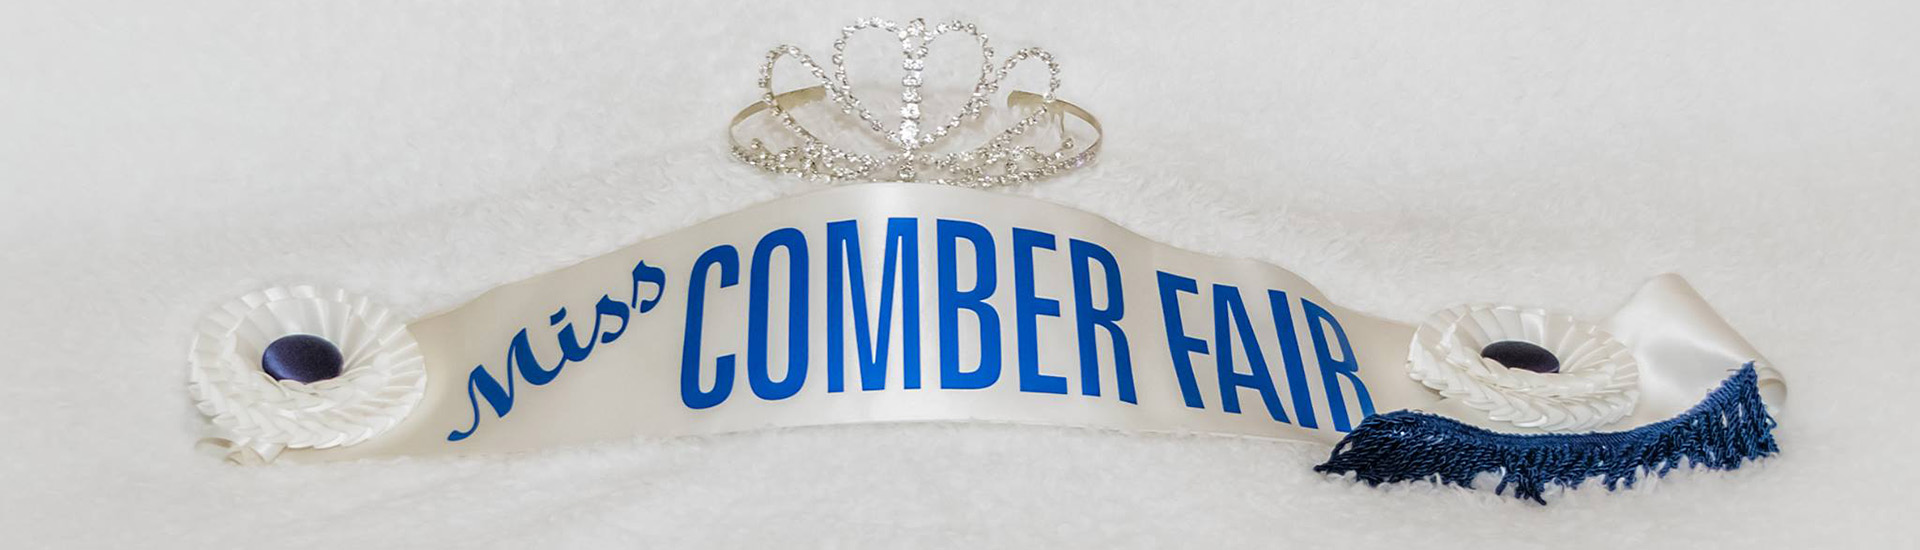 Miss Comber Fair